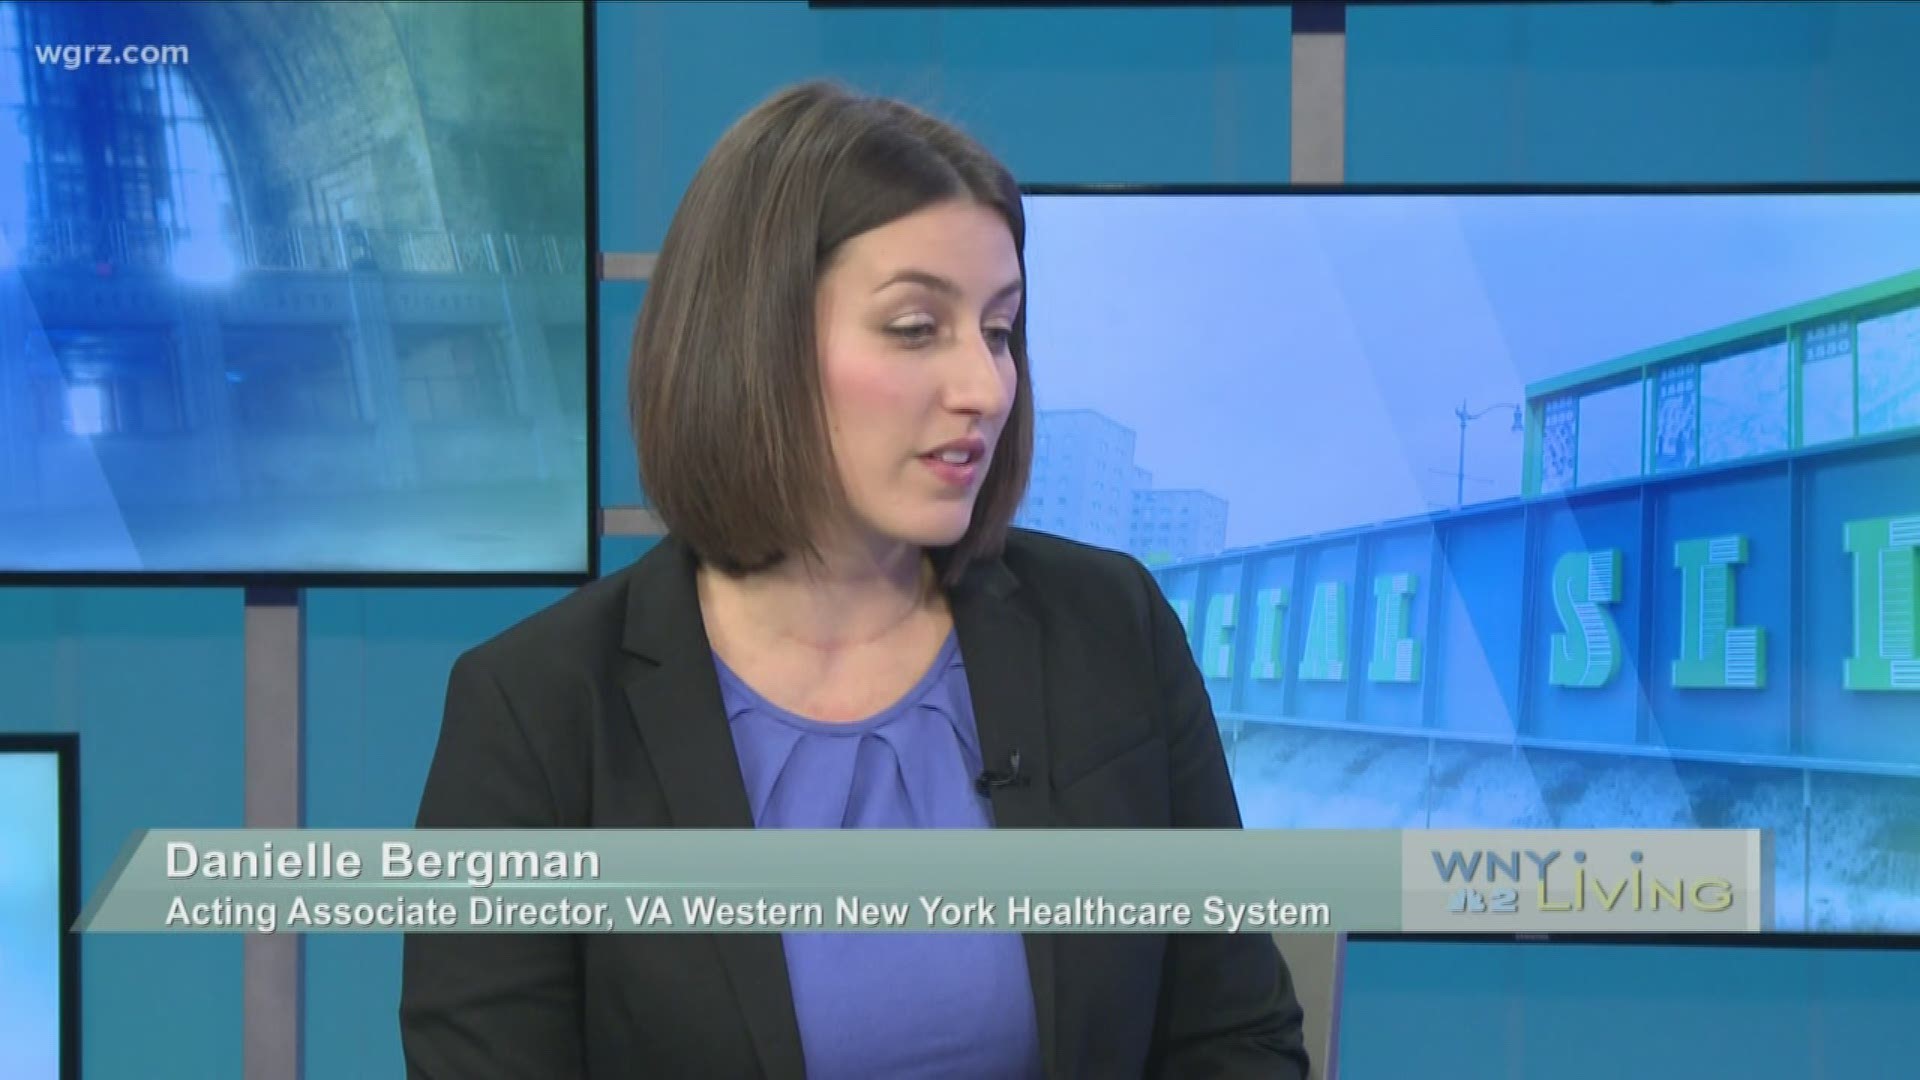 WNY Living - November 9 - VA Western New York Healthcare System (THIS VIDEO IS SPONSORED BY VA WESTERN NEW YORK HEALTHCARE SYSTEM)